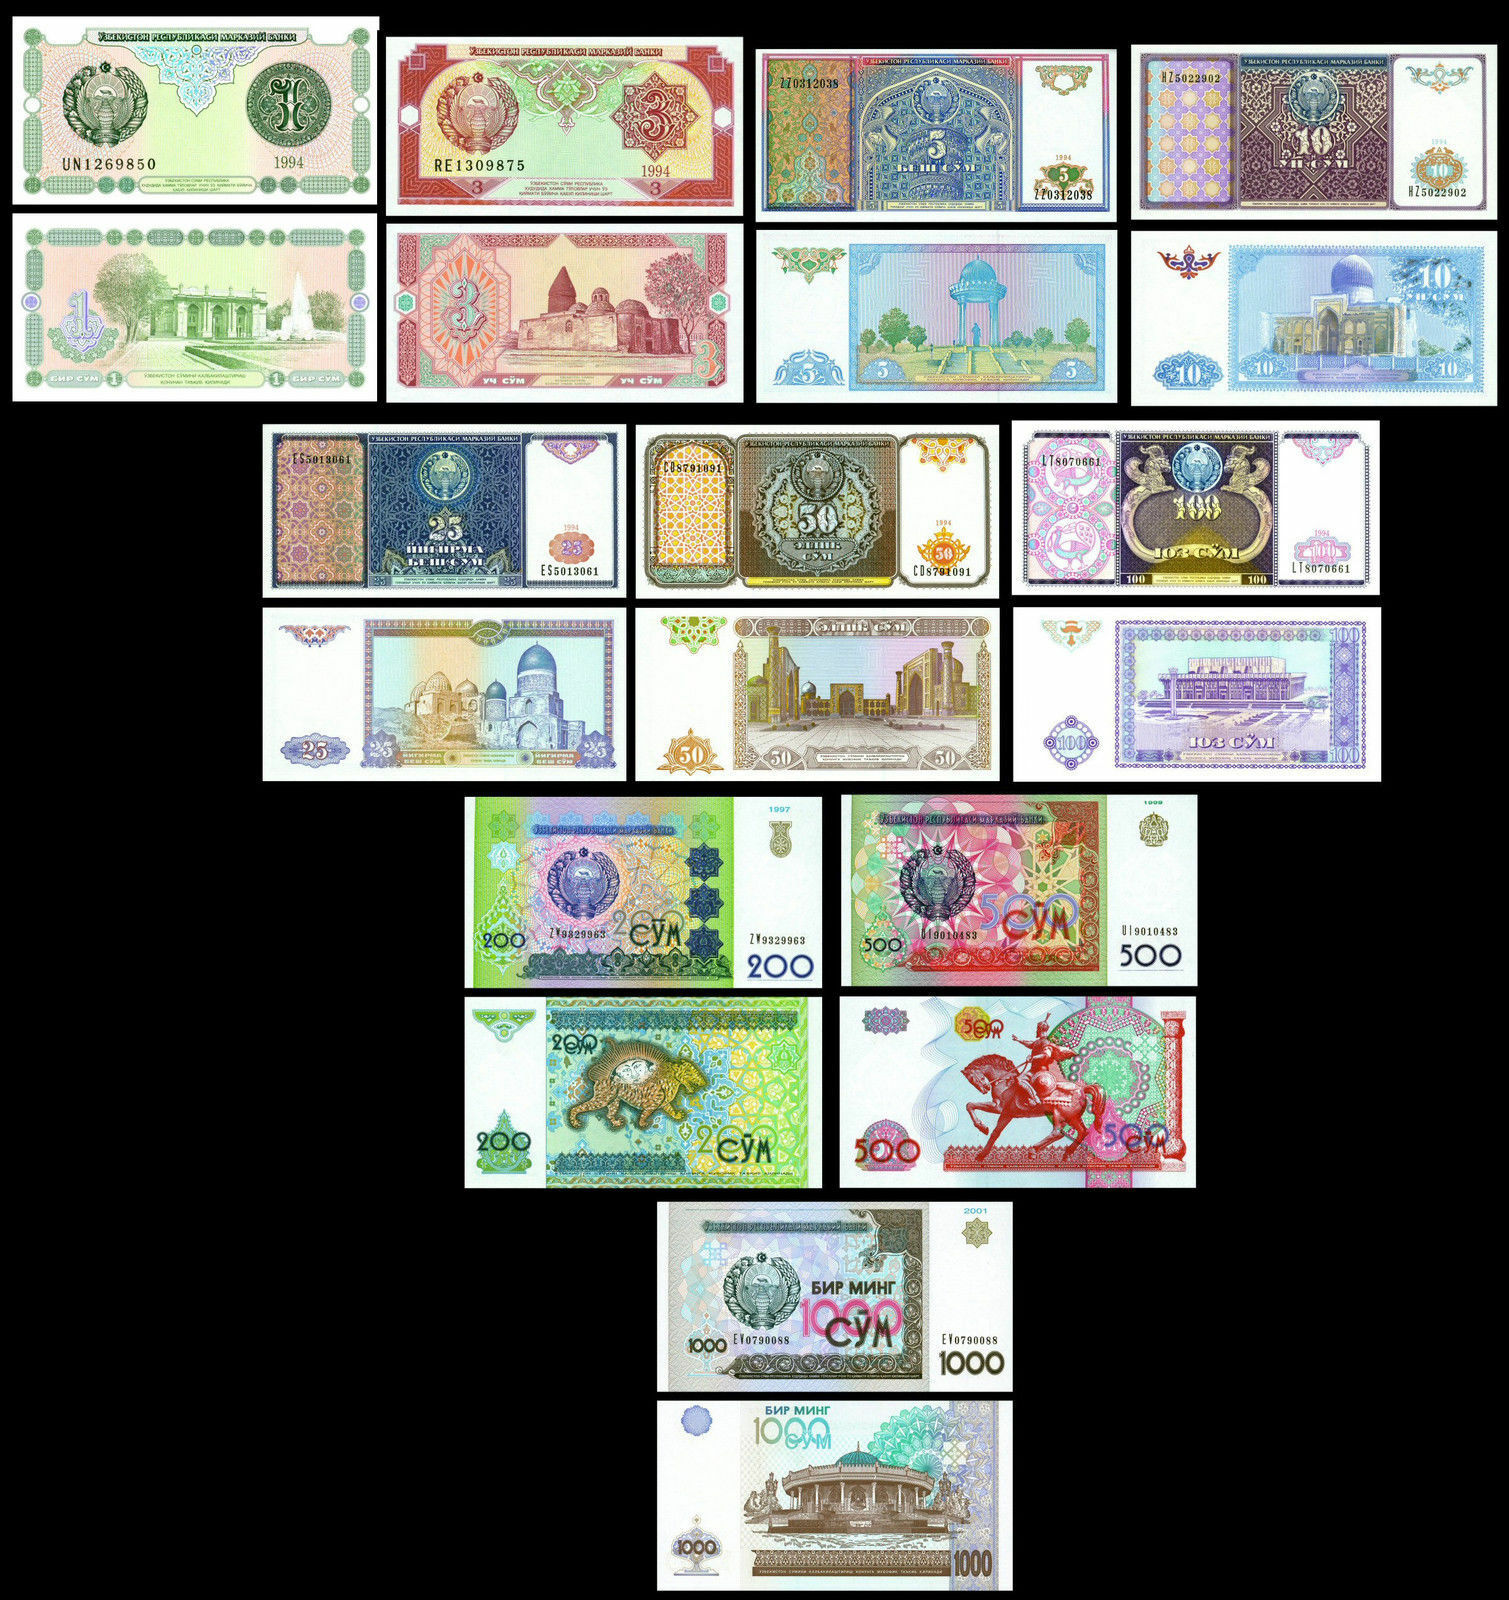 Uzbekistan P-73,74,75,76,77,78,79,80,81,82 Uncirculated Banknotes Set # 3